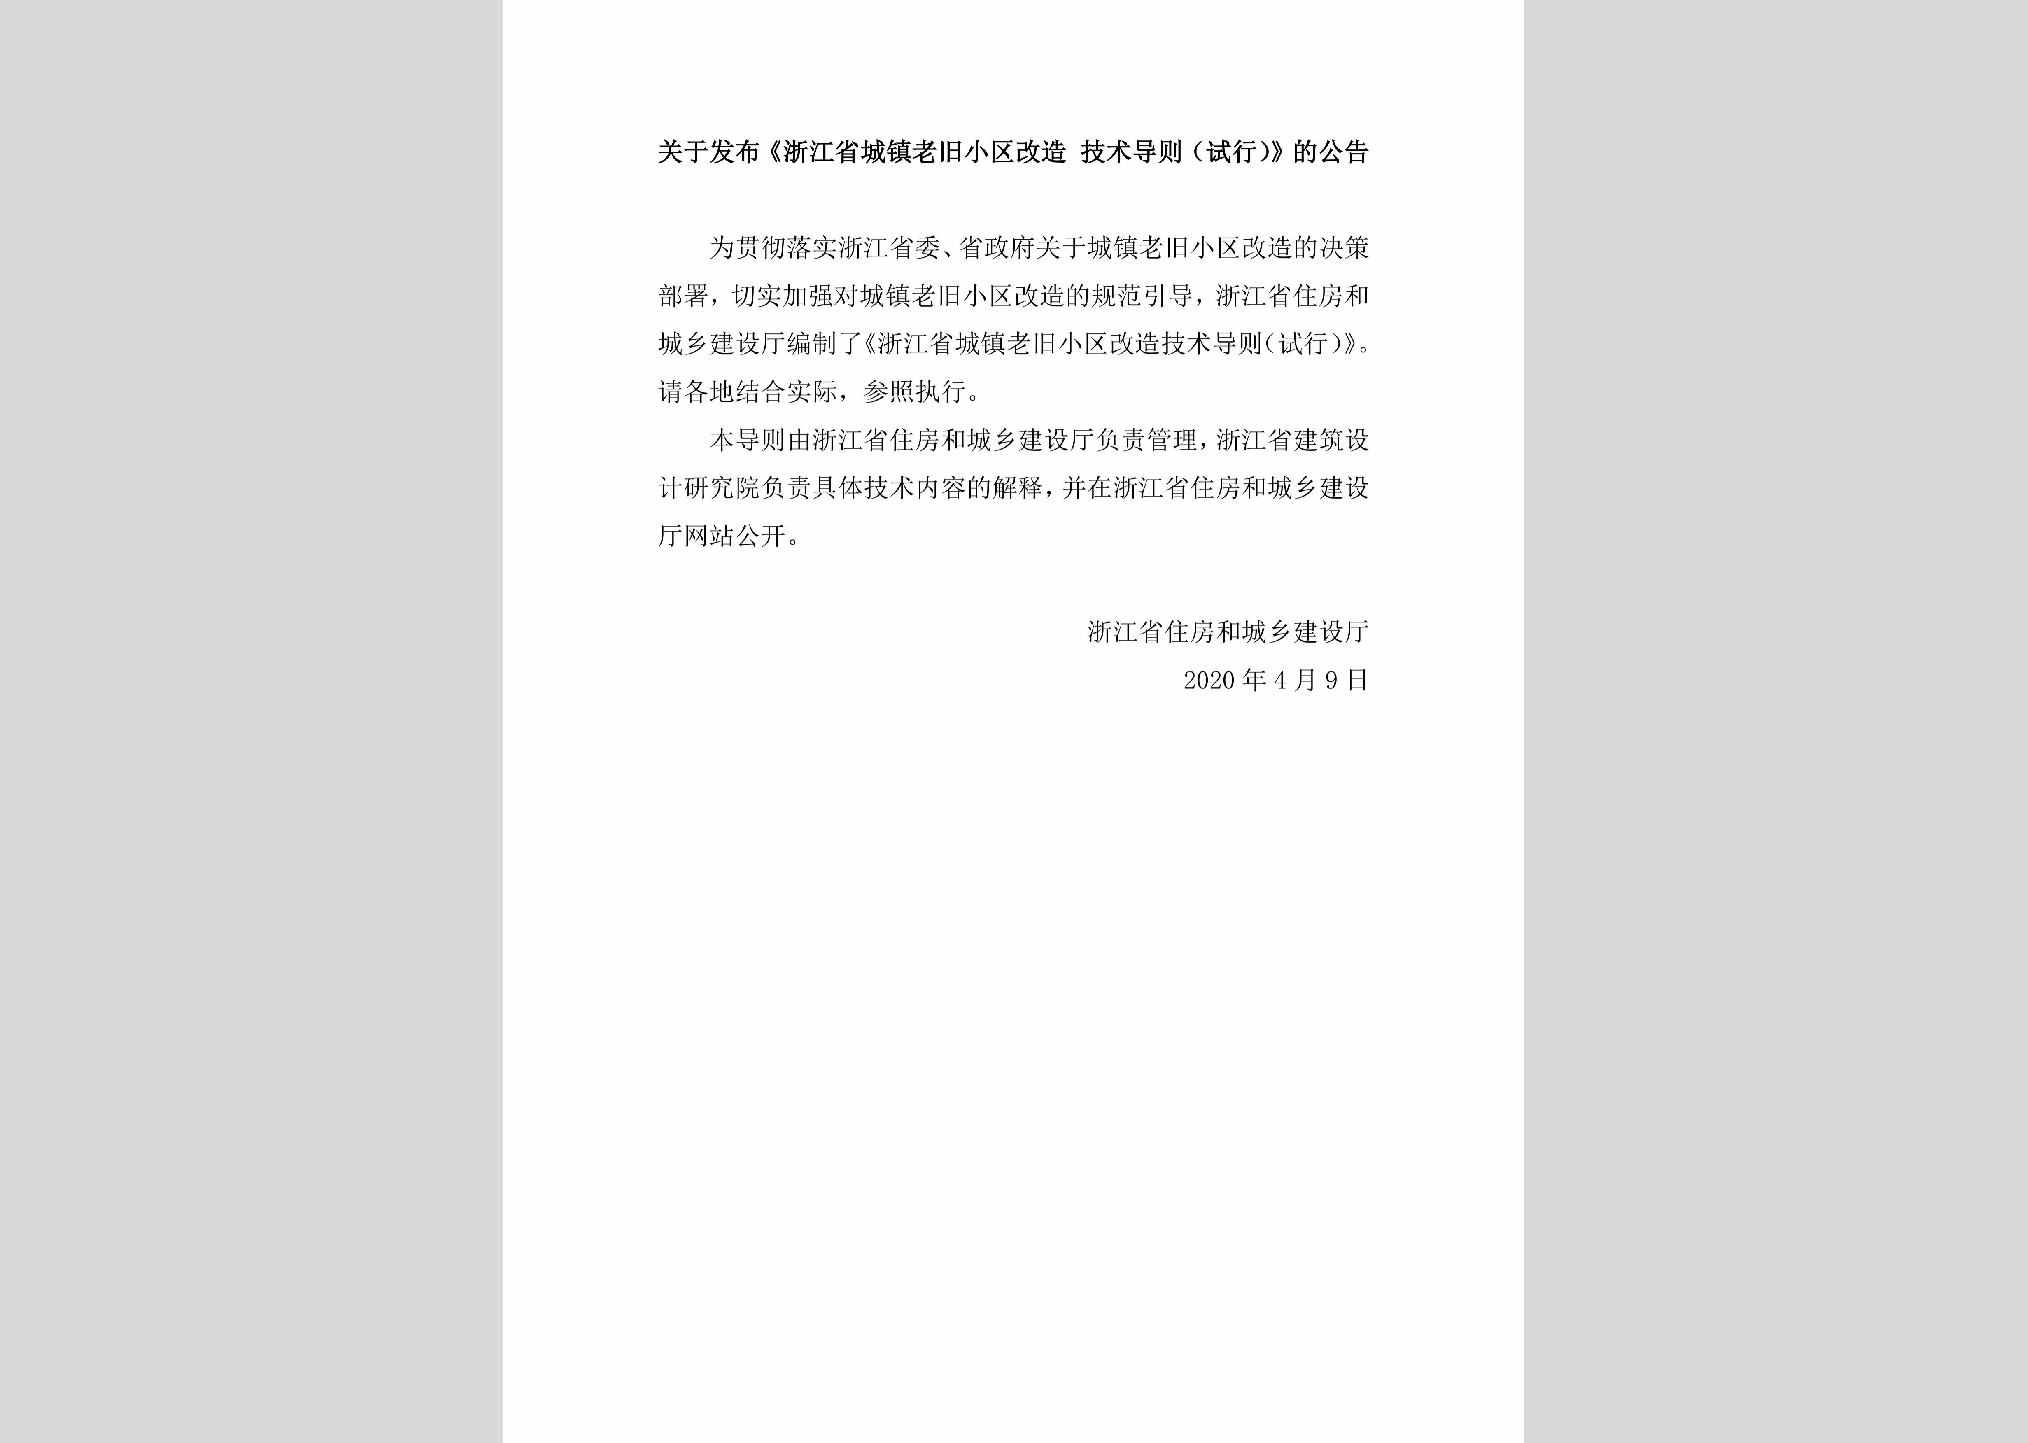 ZJ-CZLJXQGZ-2020：关于发布《浙江省城镇老旧小区改造技术导则（试行）》的公告